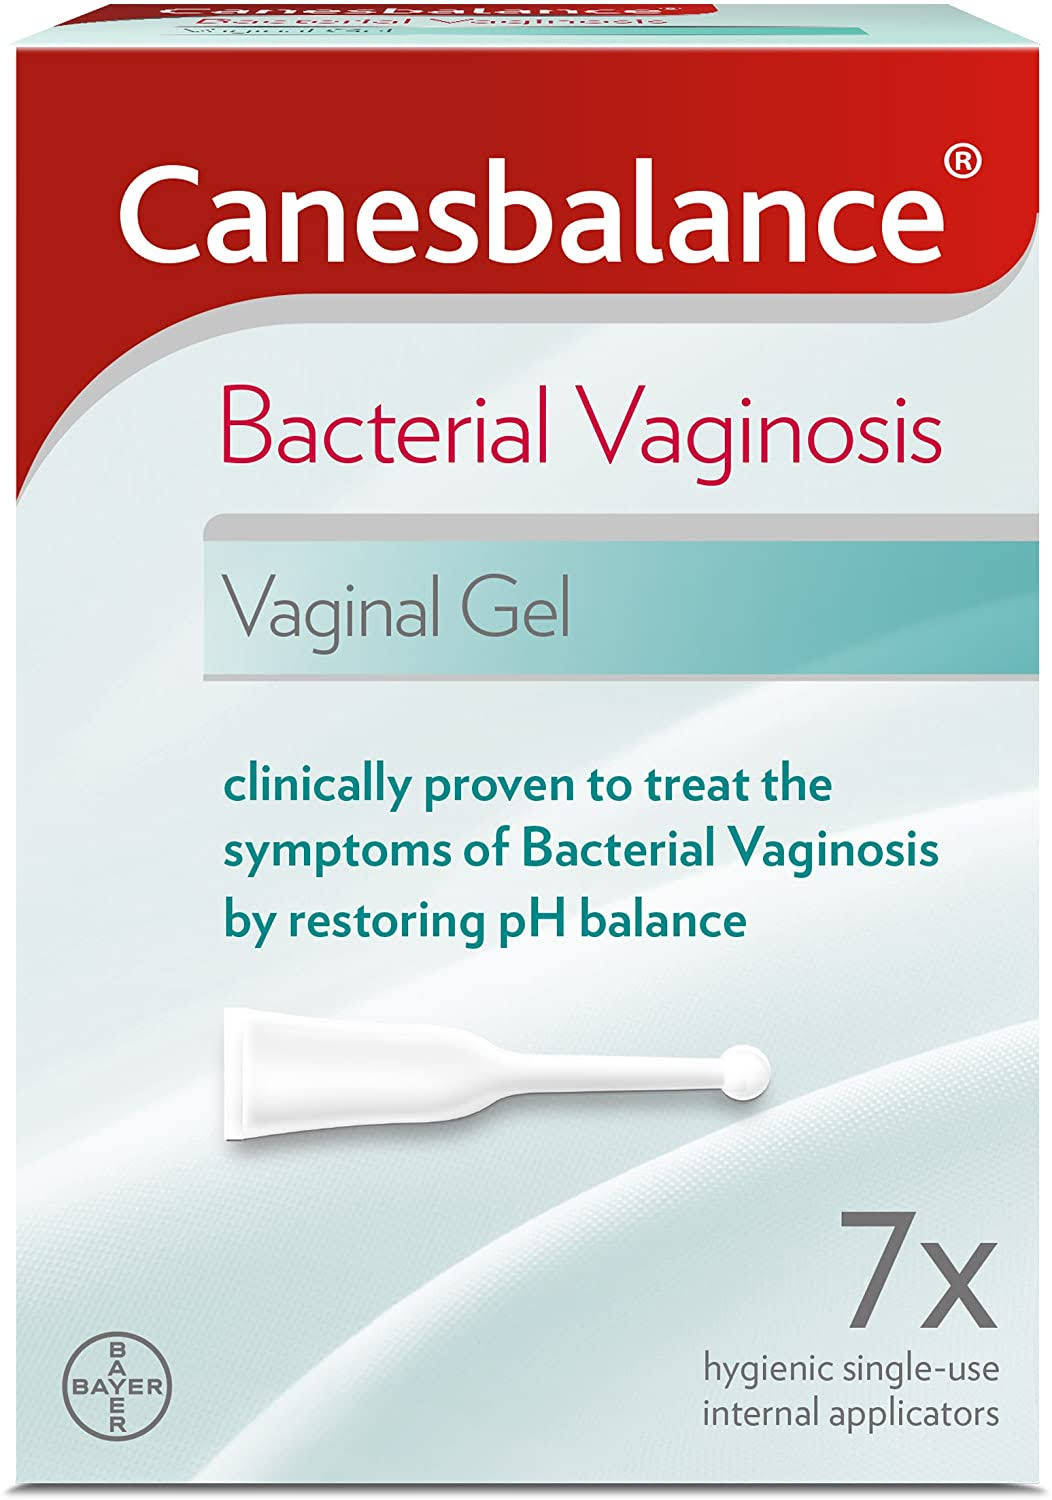 Canesbalance Bacterial Vaginosis Gel